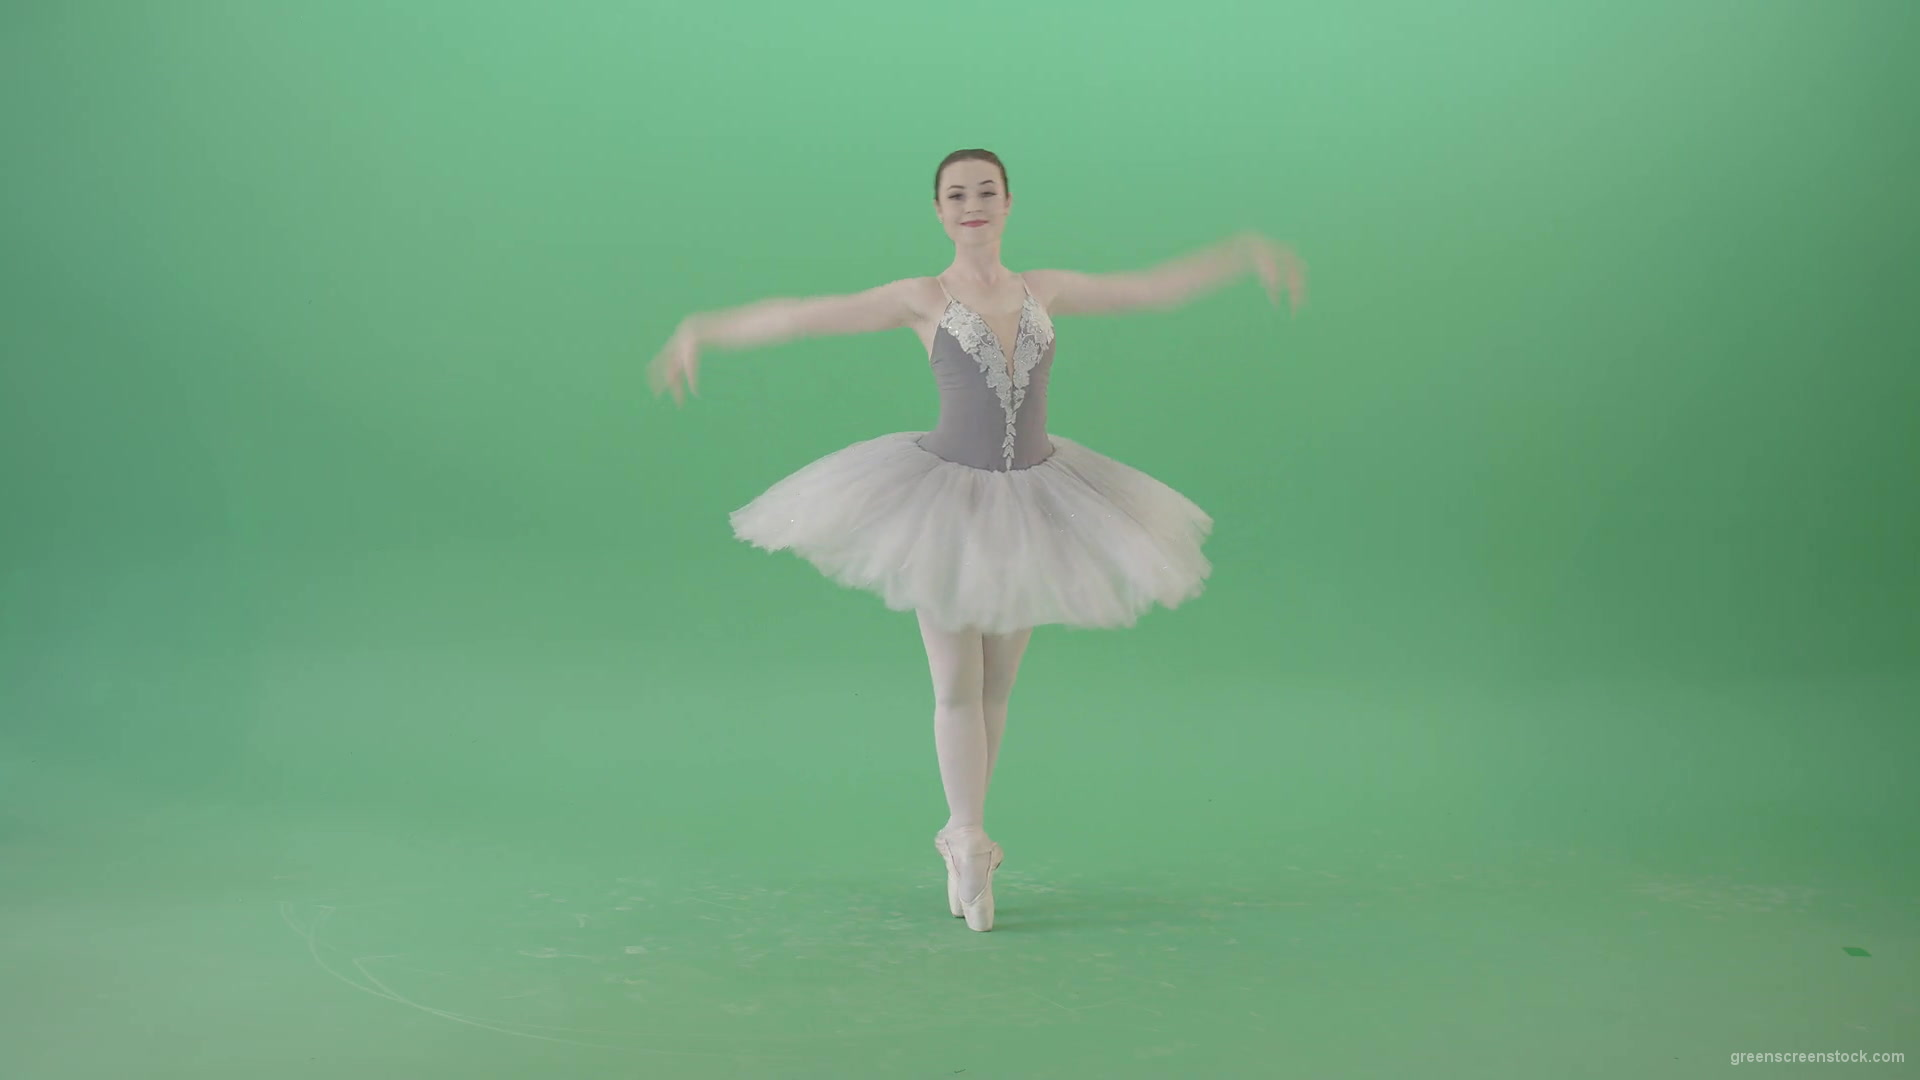 Ballerina-waving-hands-and-dance-on-green-screen-4K-Video-Footage-1920_007 Green Screen Stock